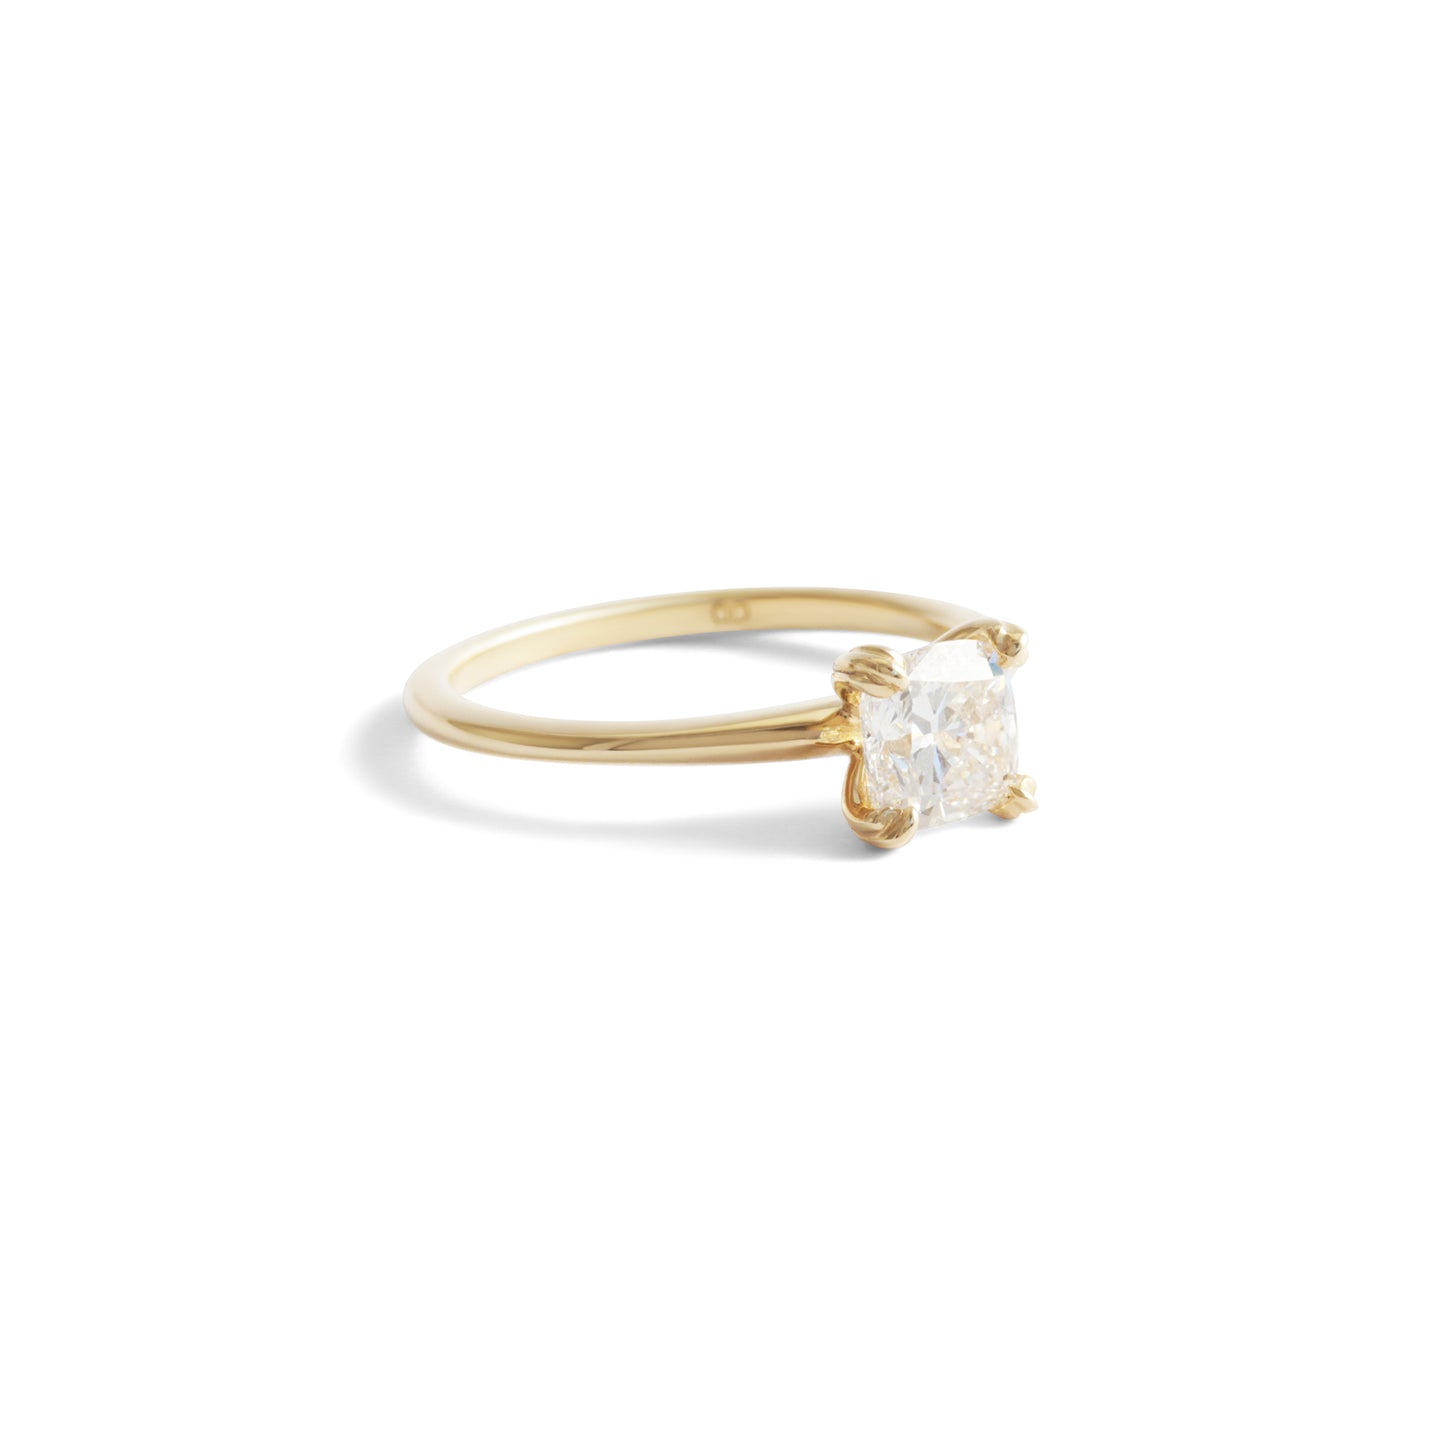 Cornice 4 Prong Ring / Lab Cushion Diamond - Goldpoint Studio - Greenpoint, Brooklyn - Fine Jewelry